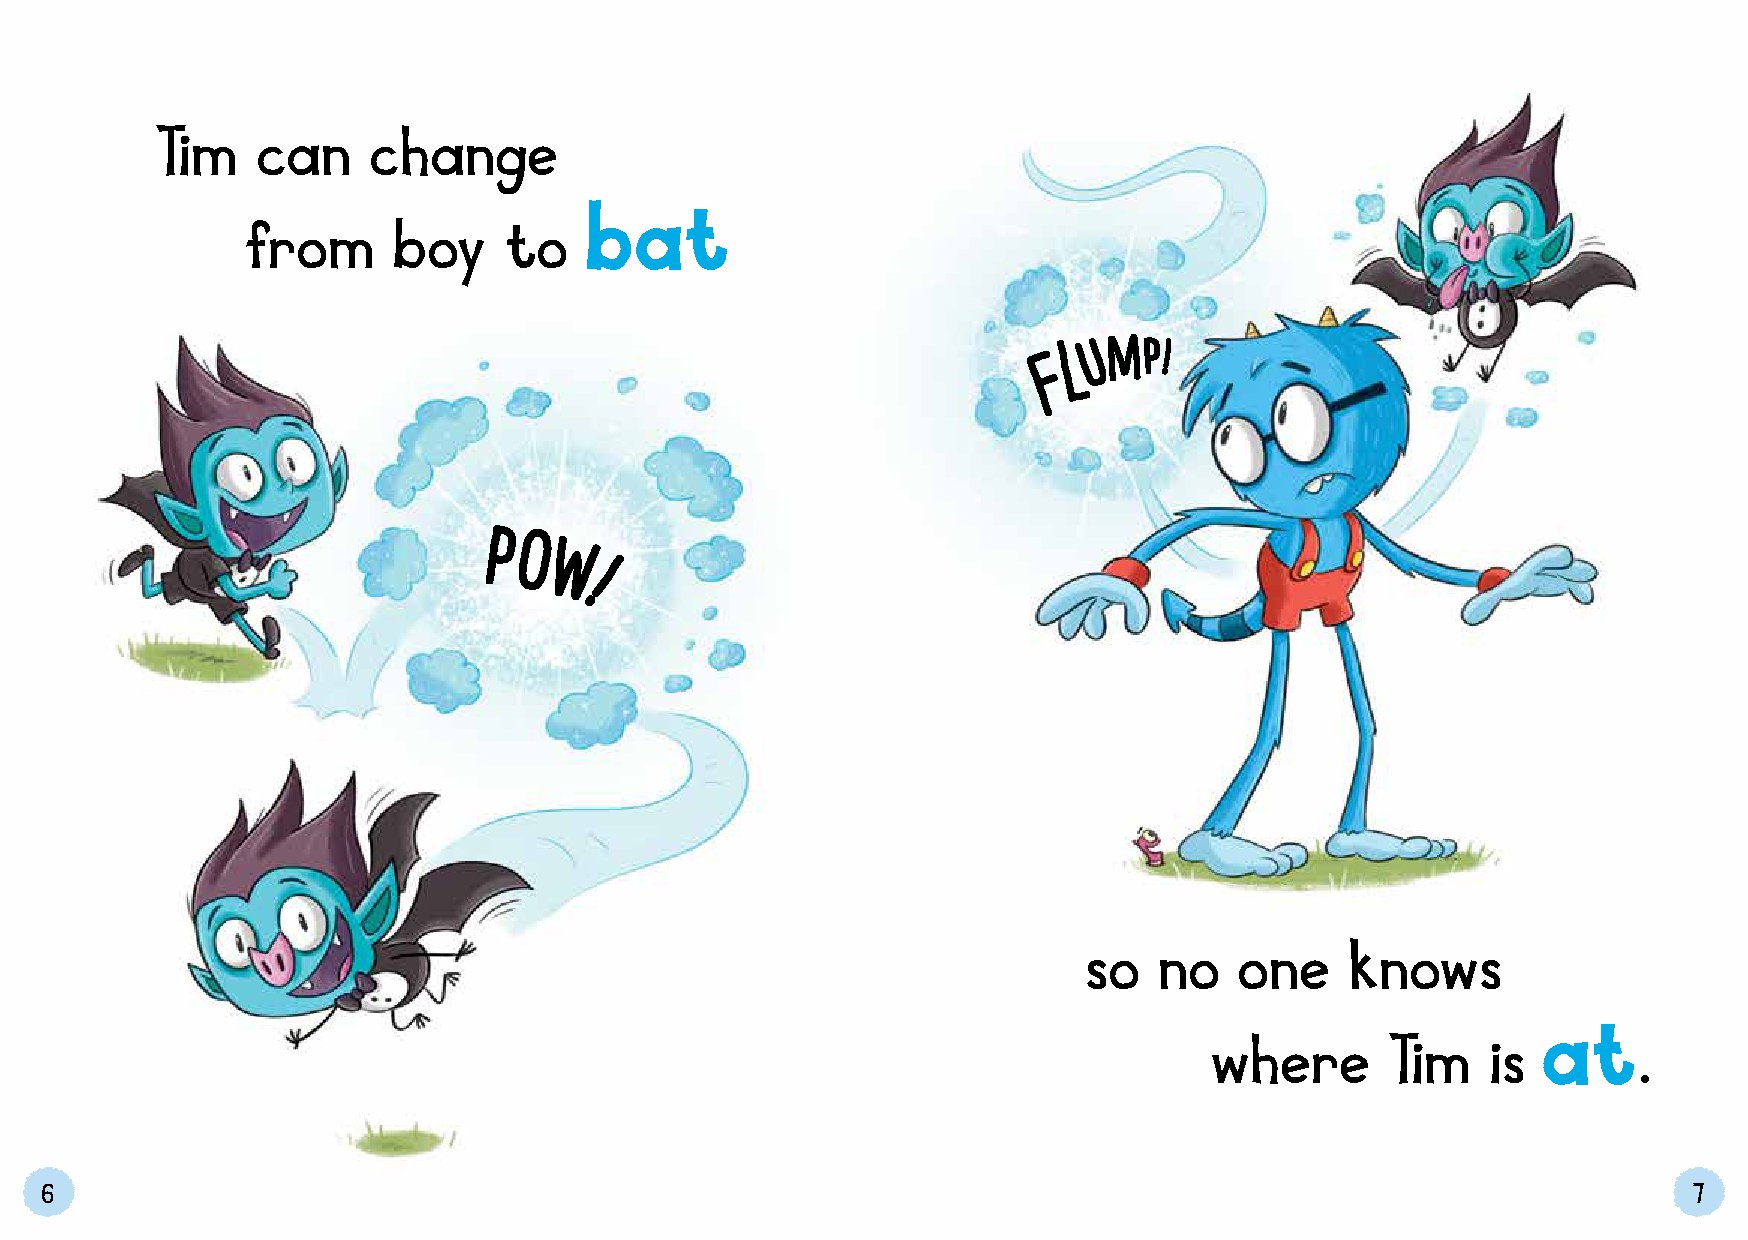 Bat-Boy Tim Says Boo